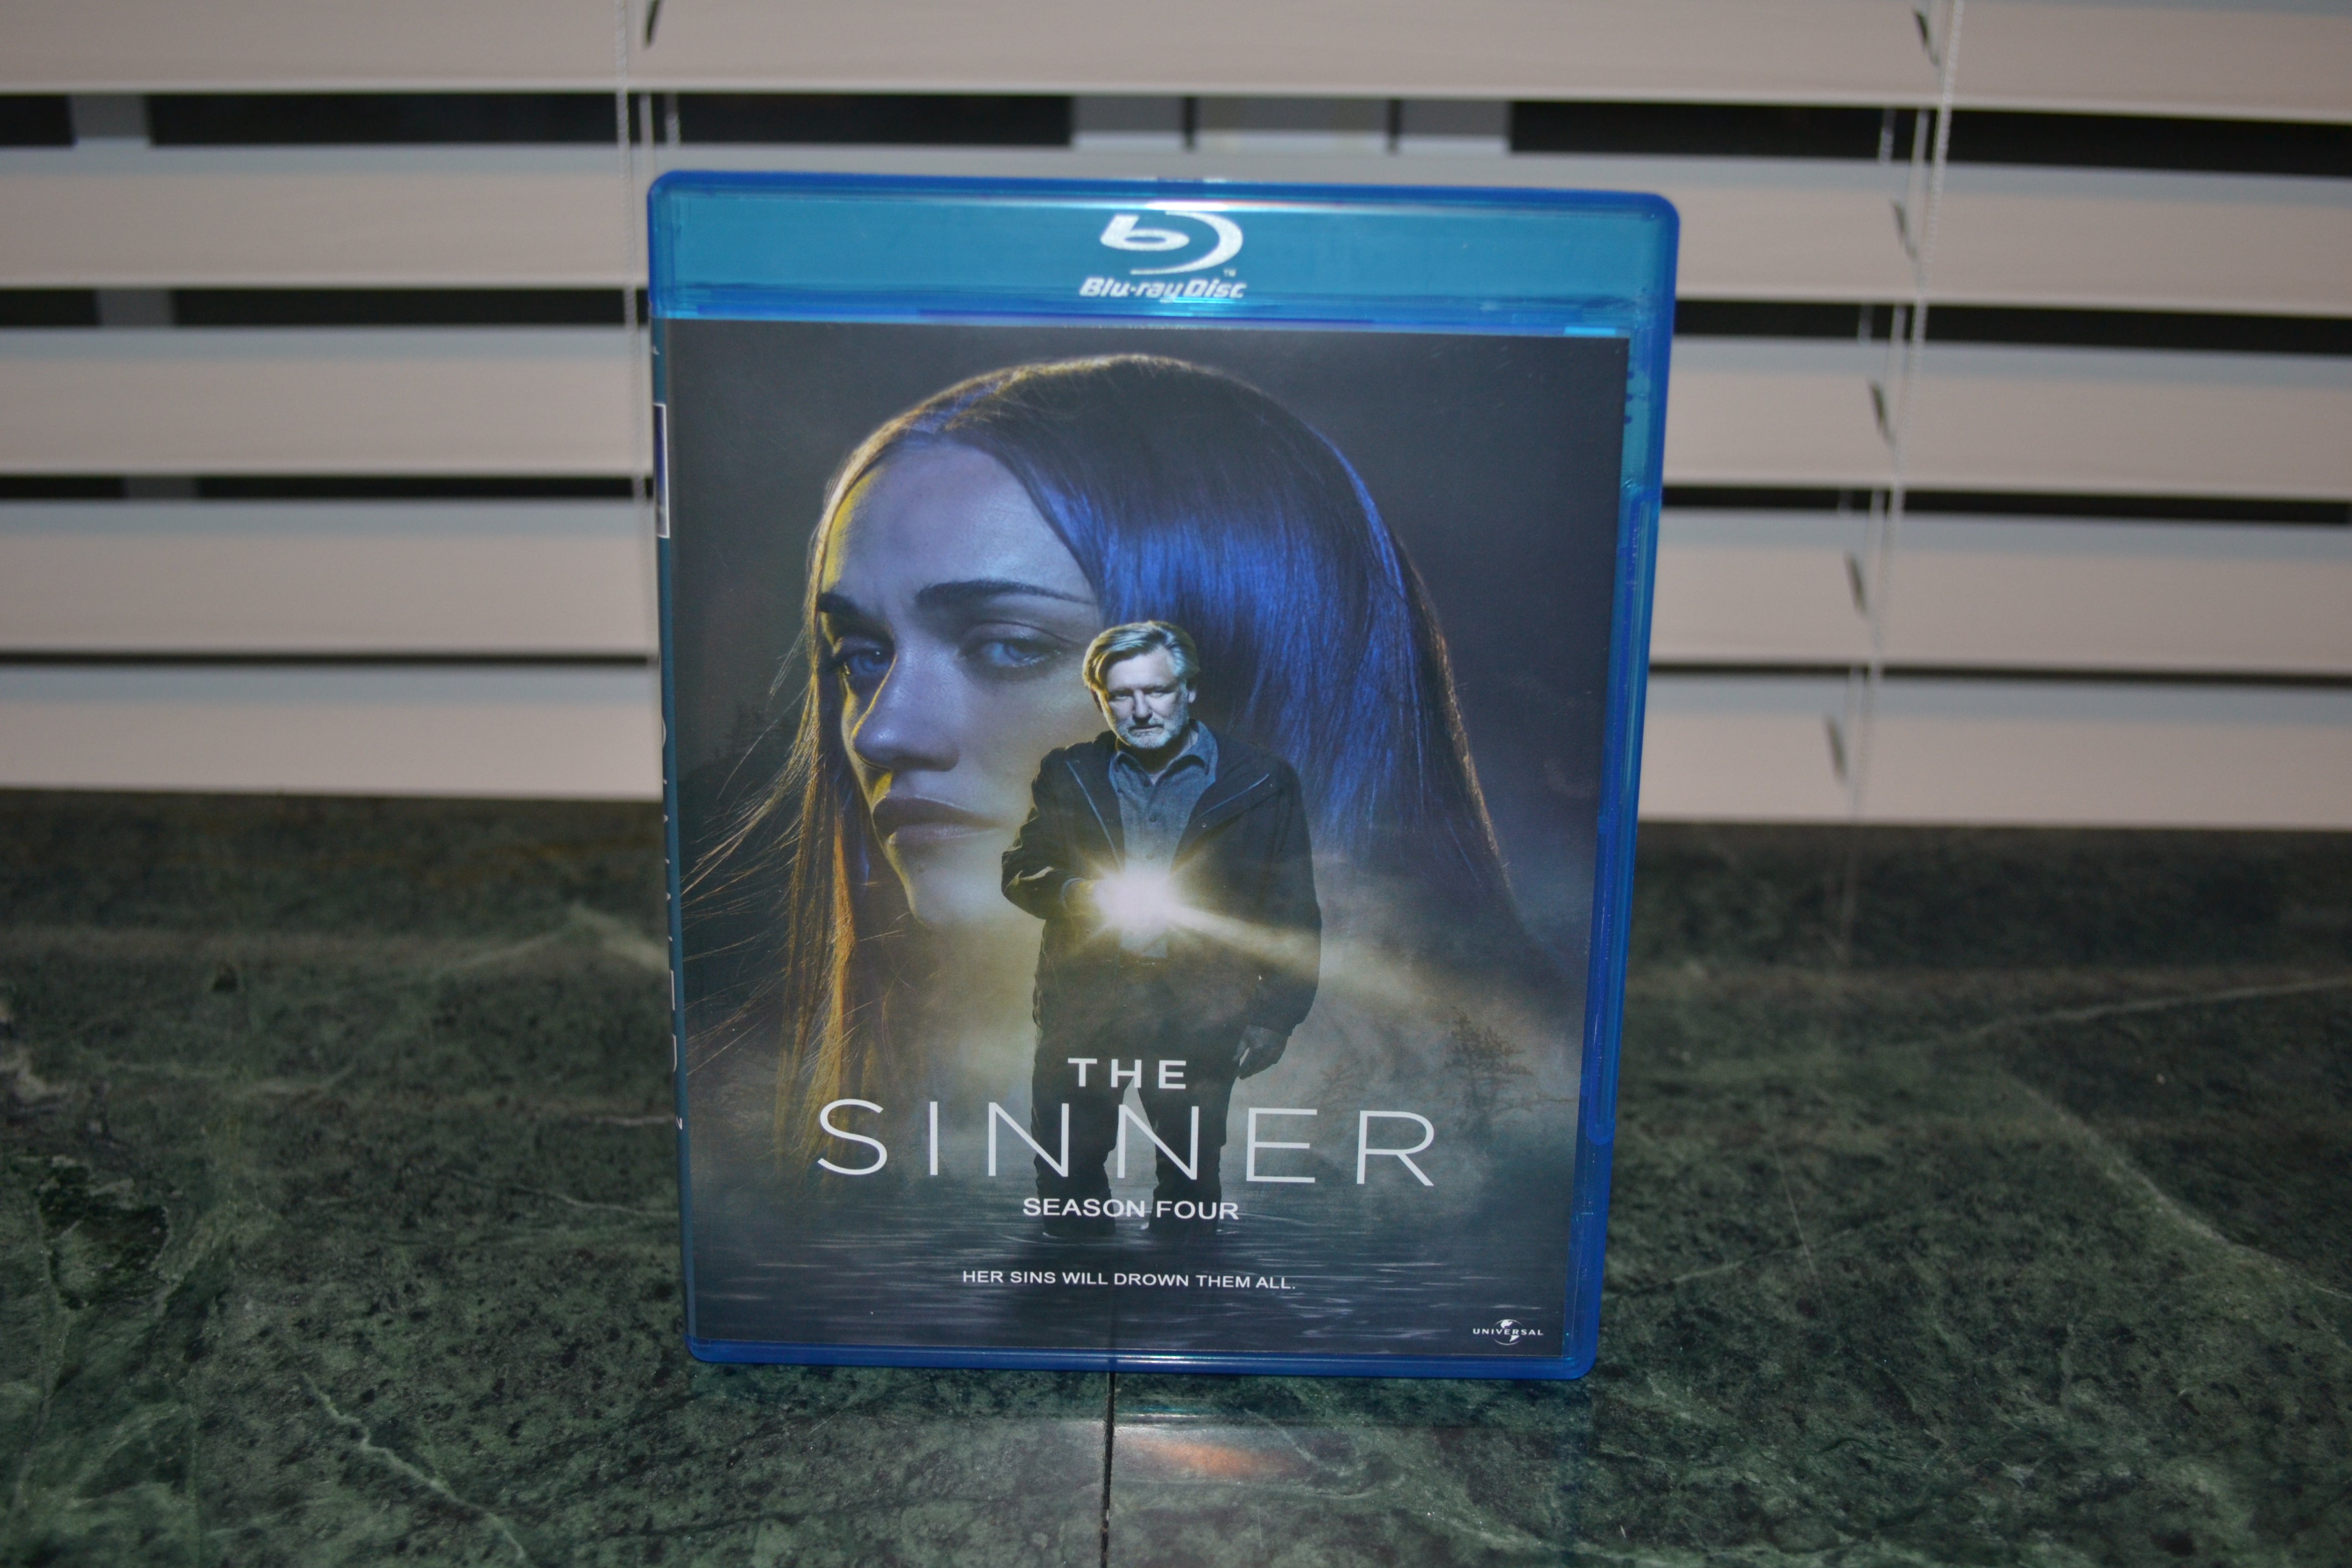 The Sinner Season 4 Blu-ray Set